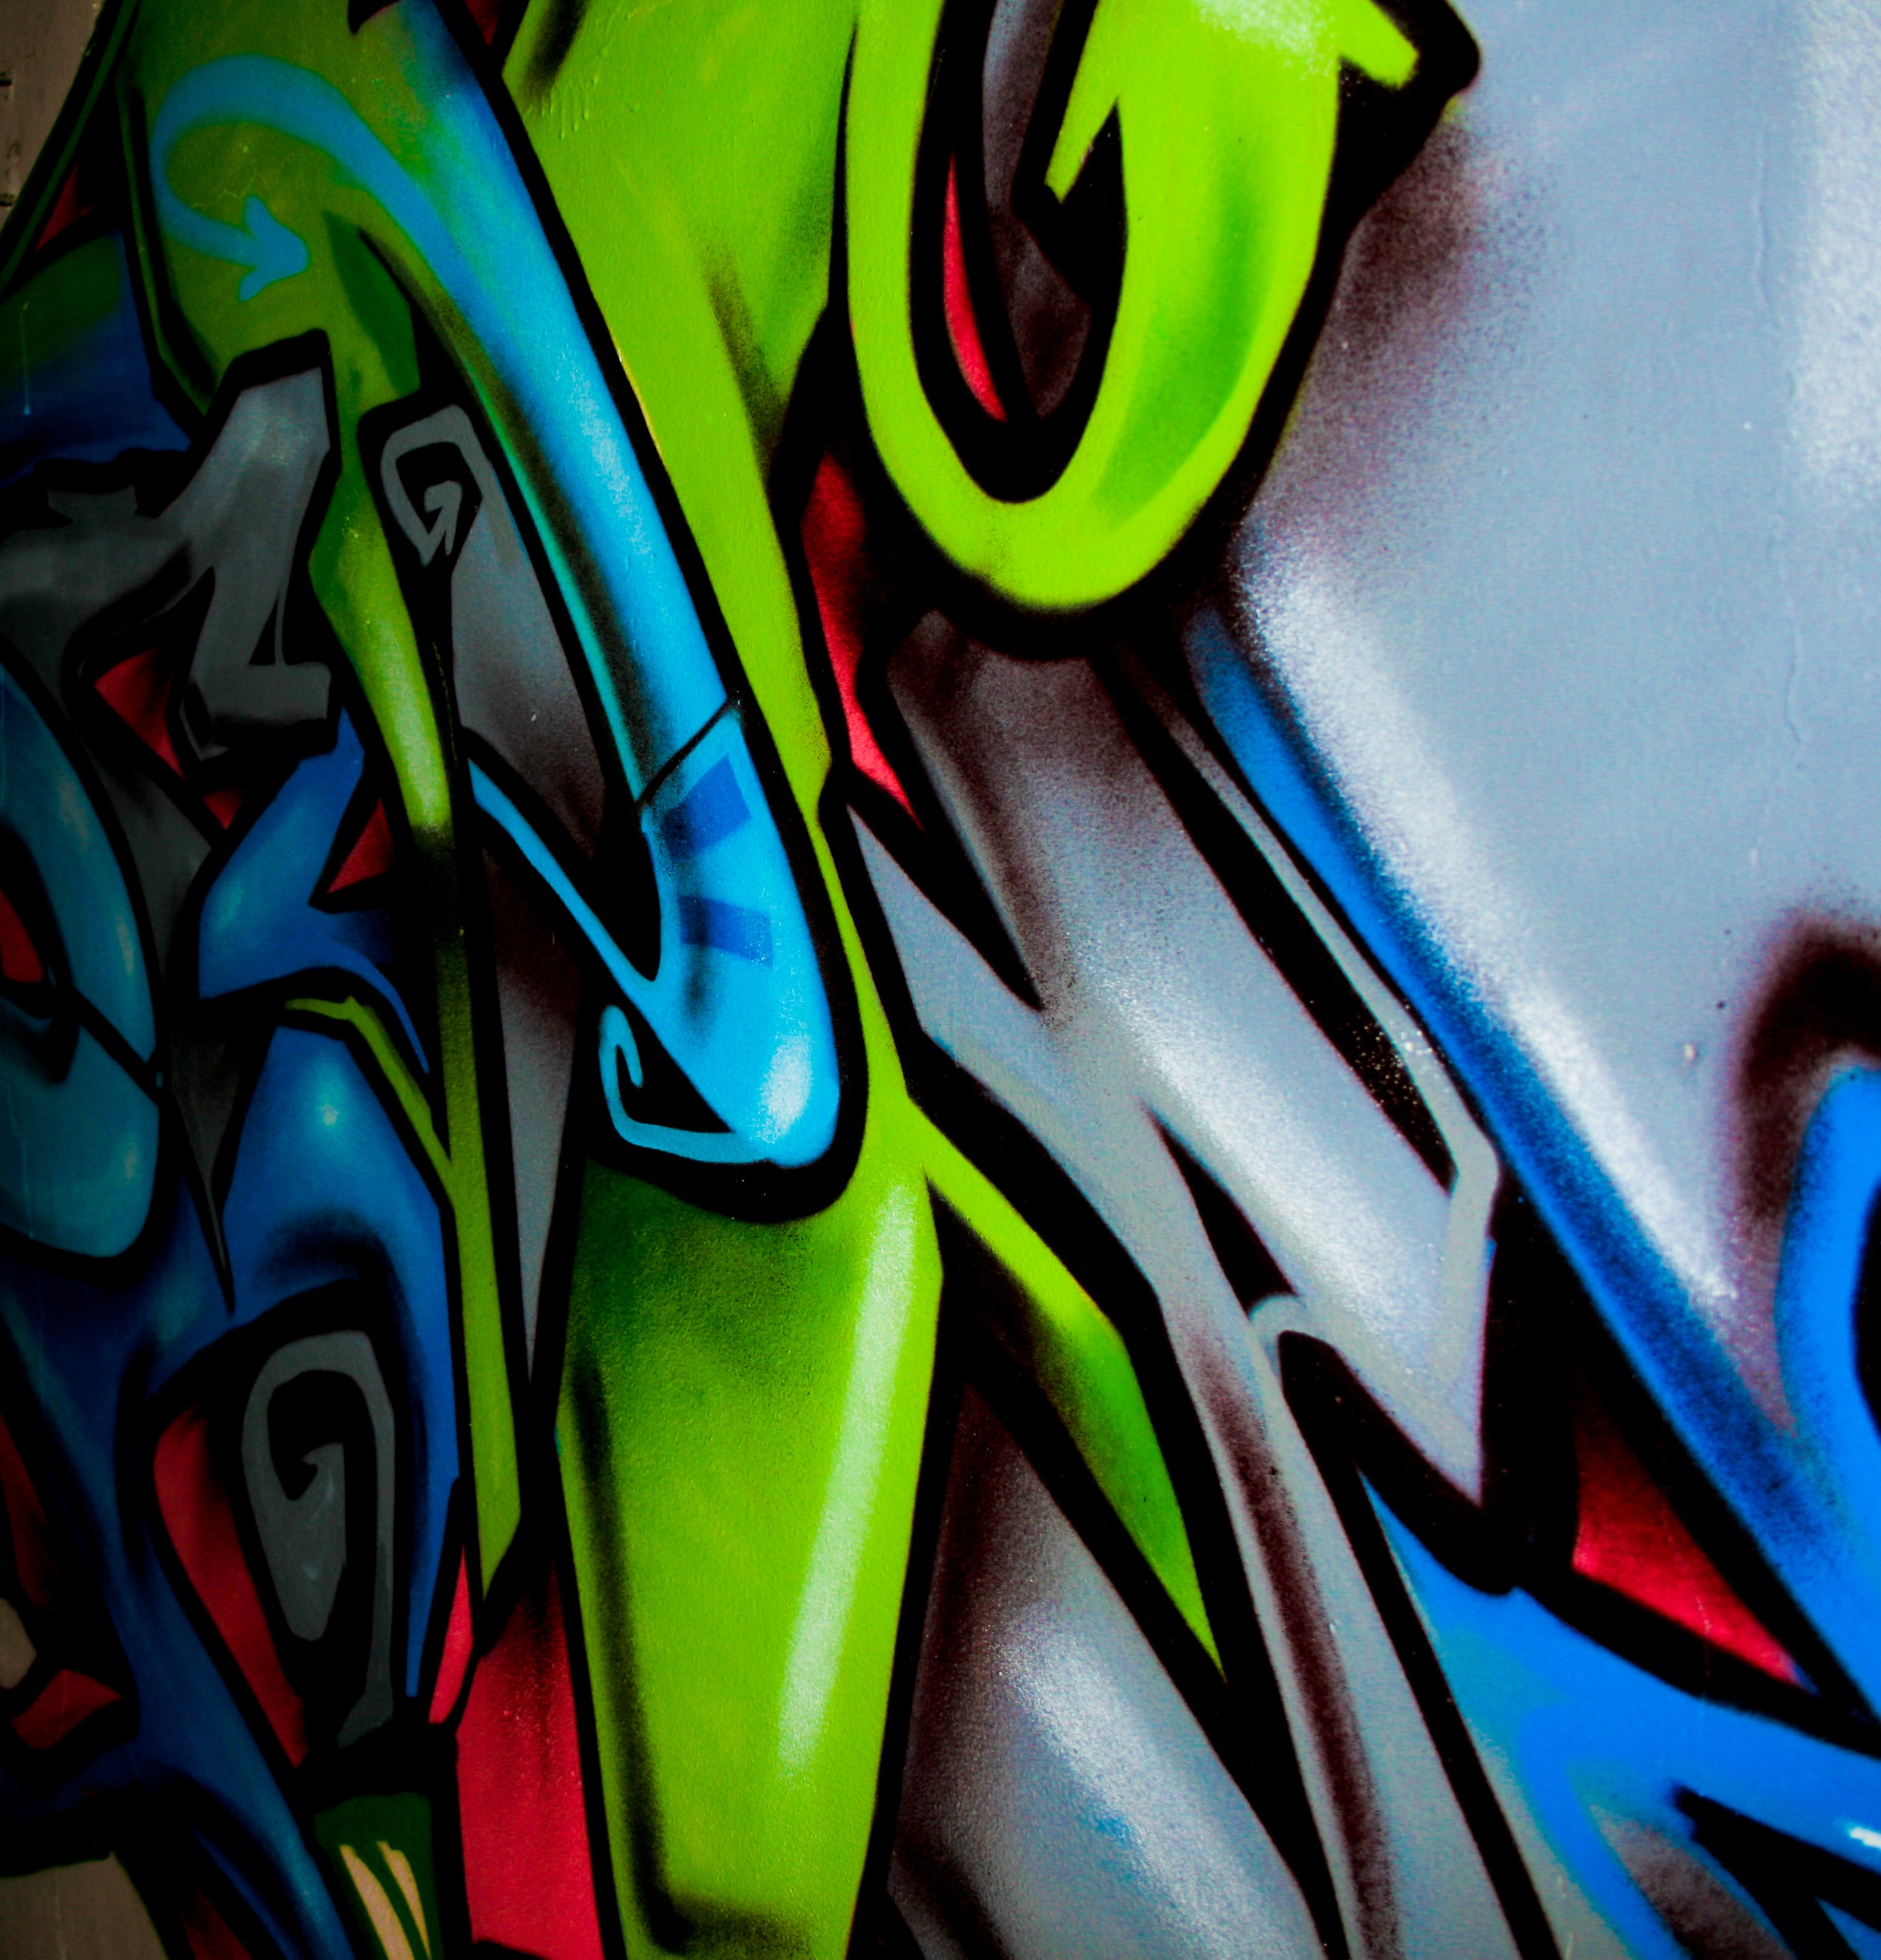 8k Images art, paint, graffiti